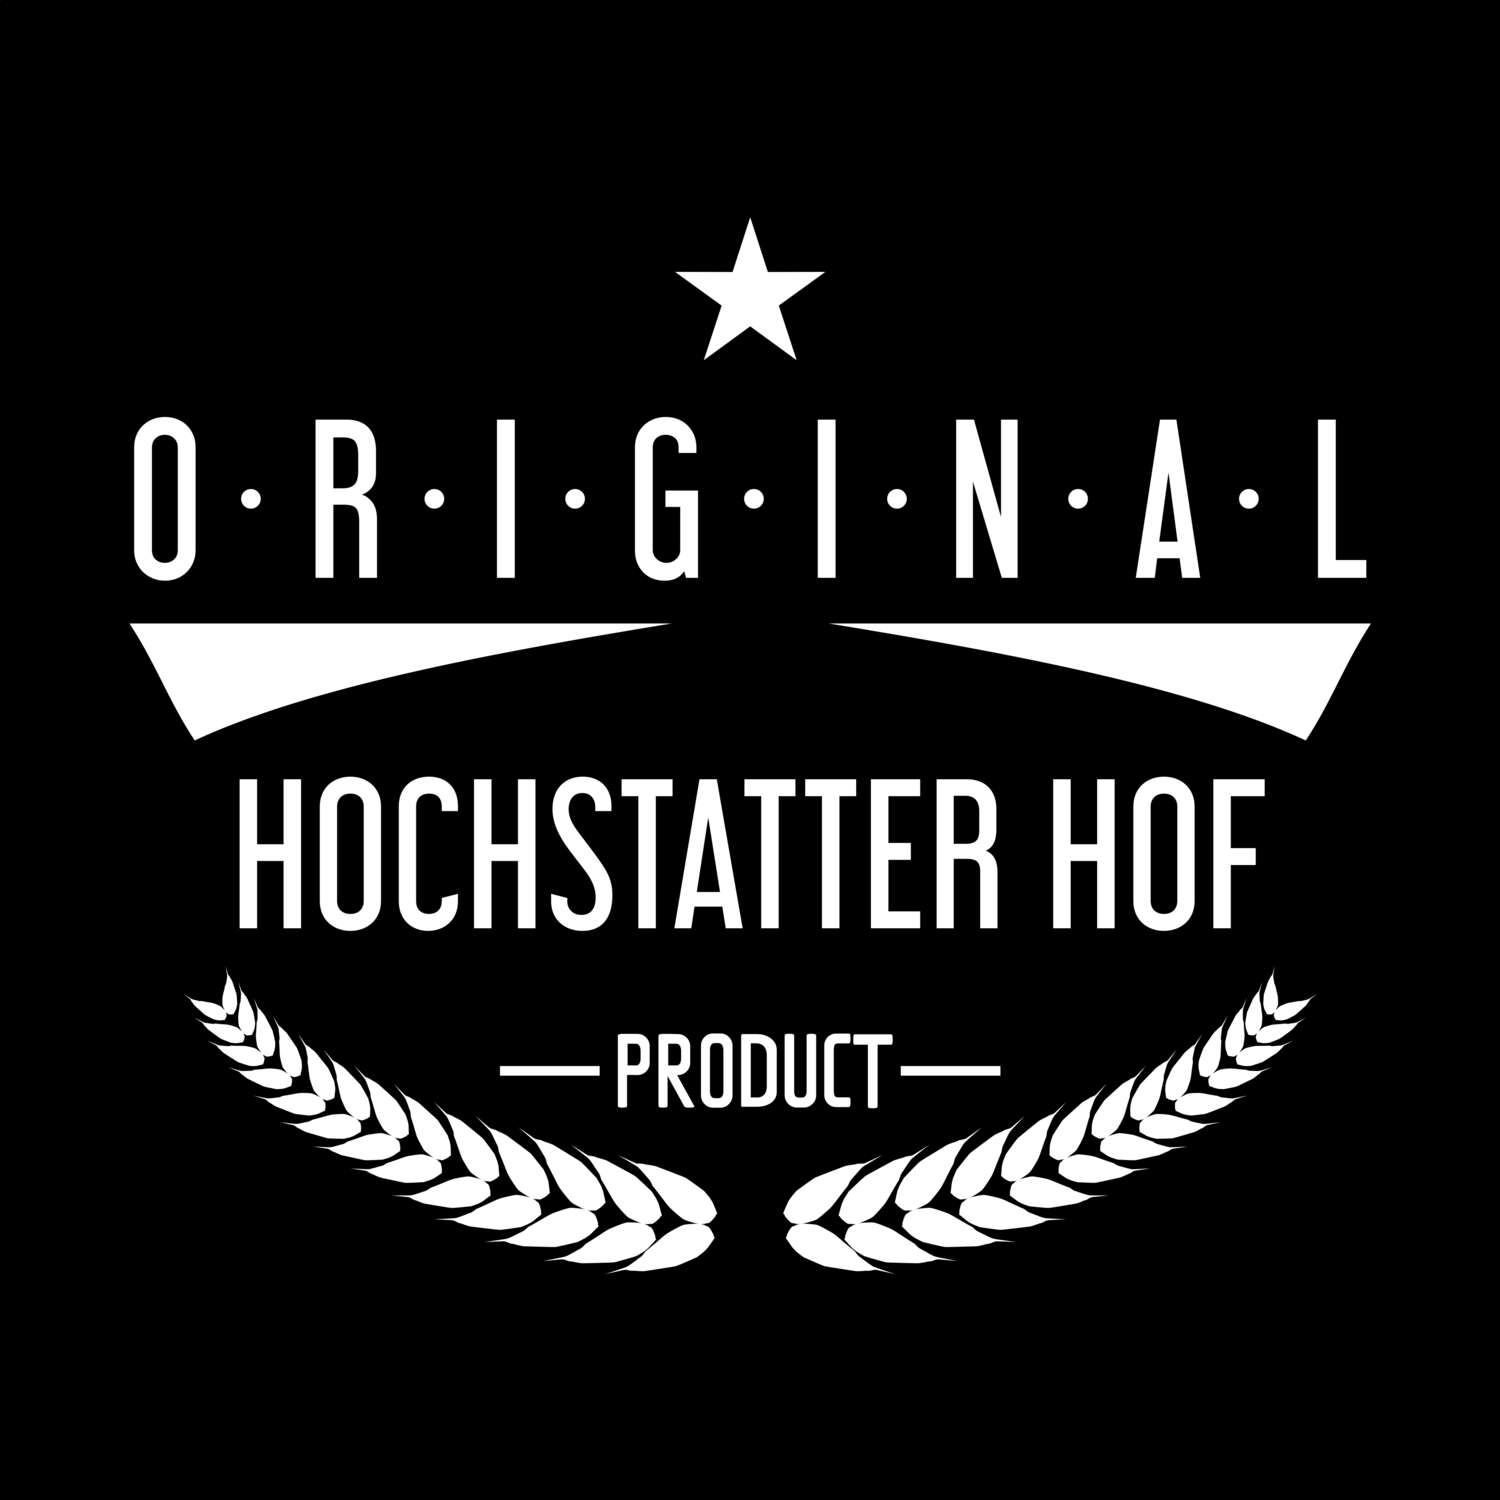 Hochstatter Hof T-Shirt »Original Product«